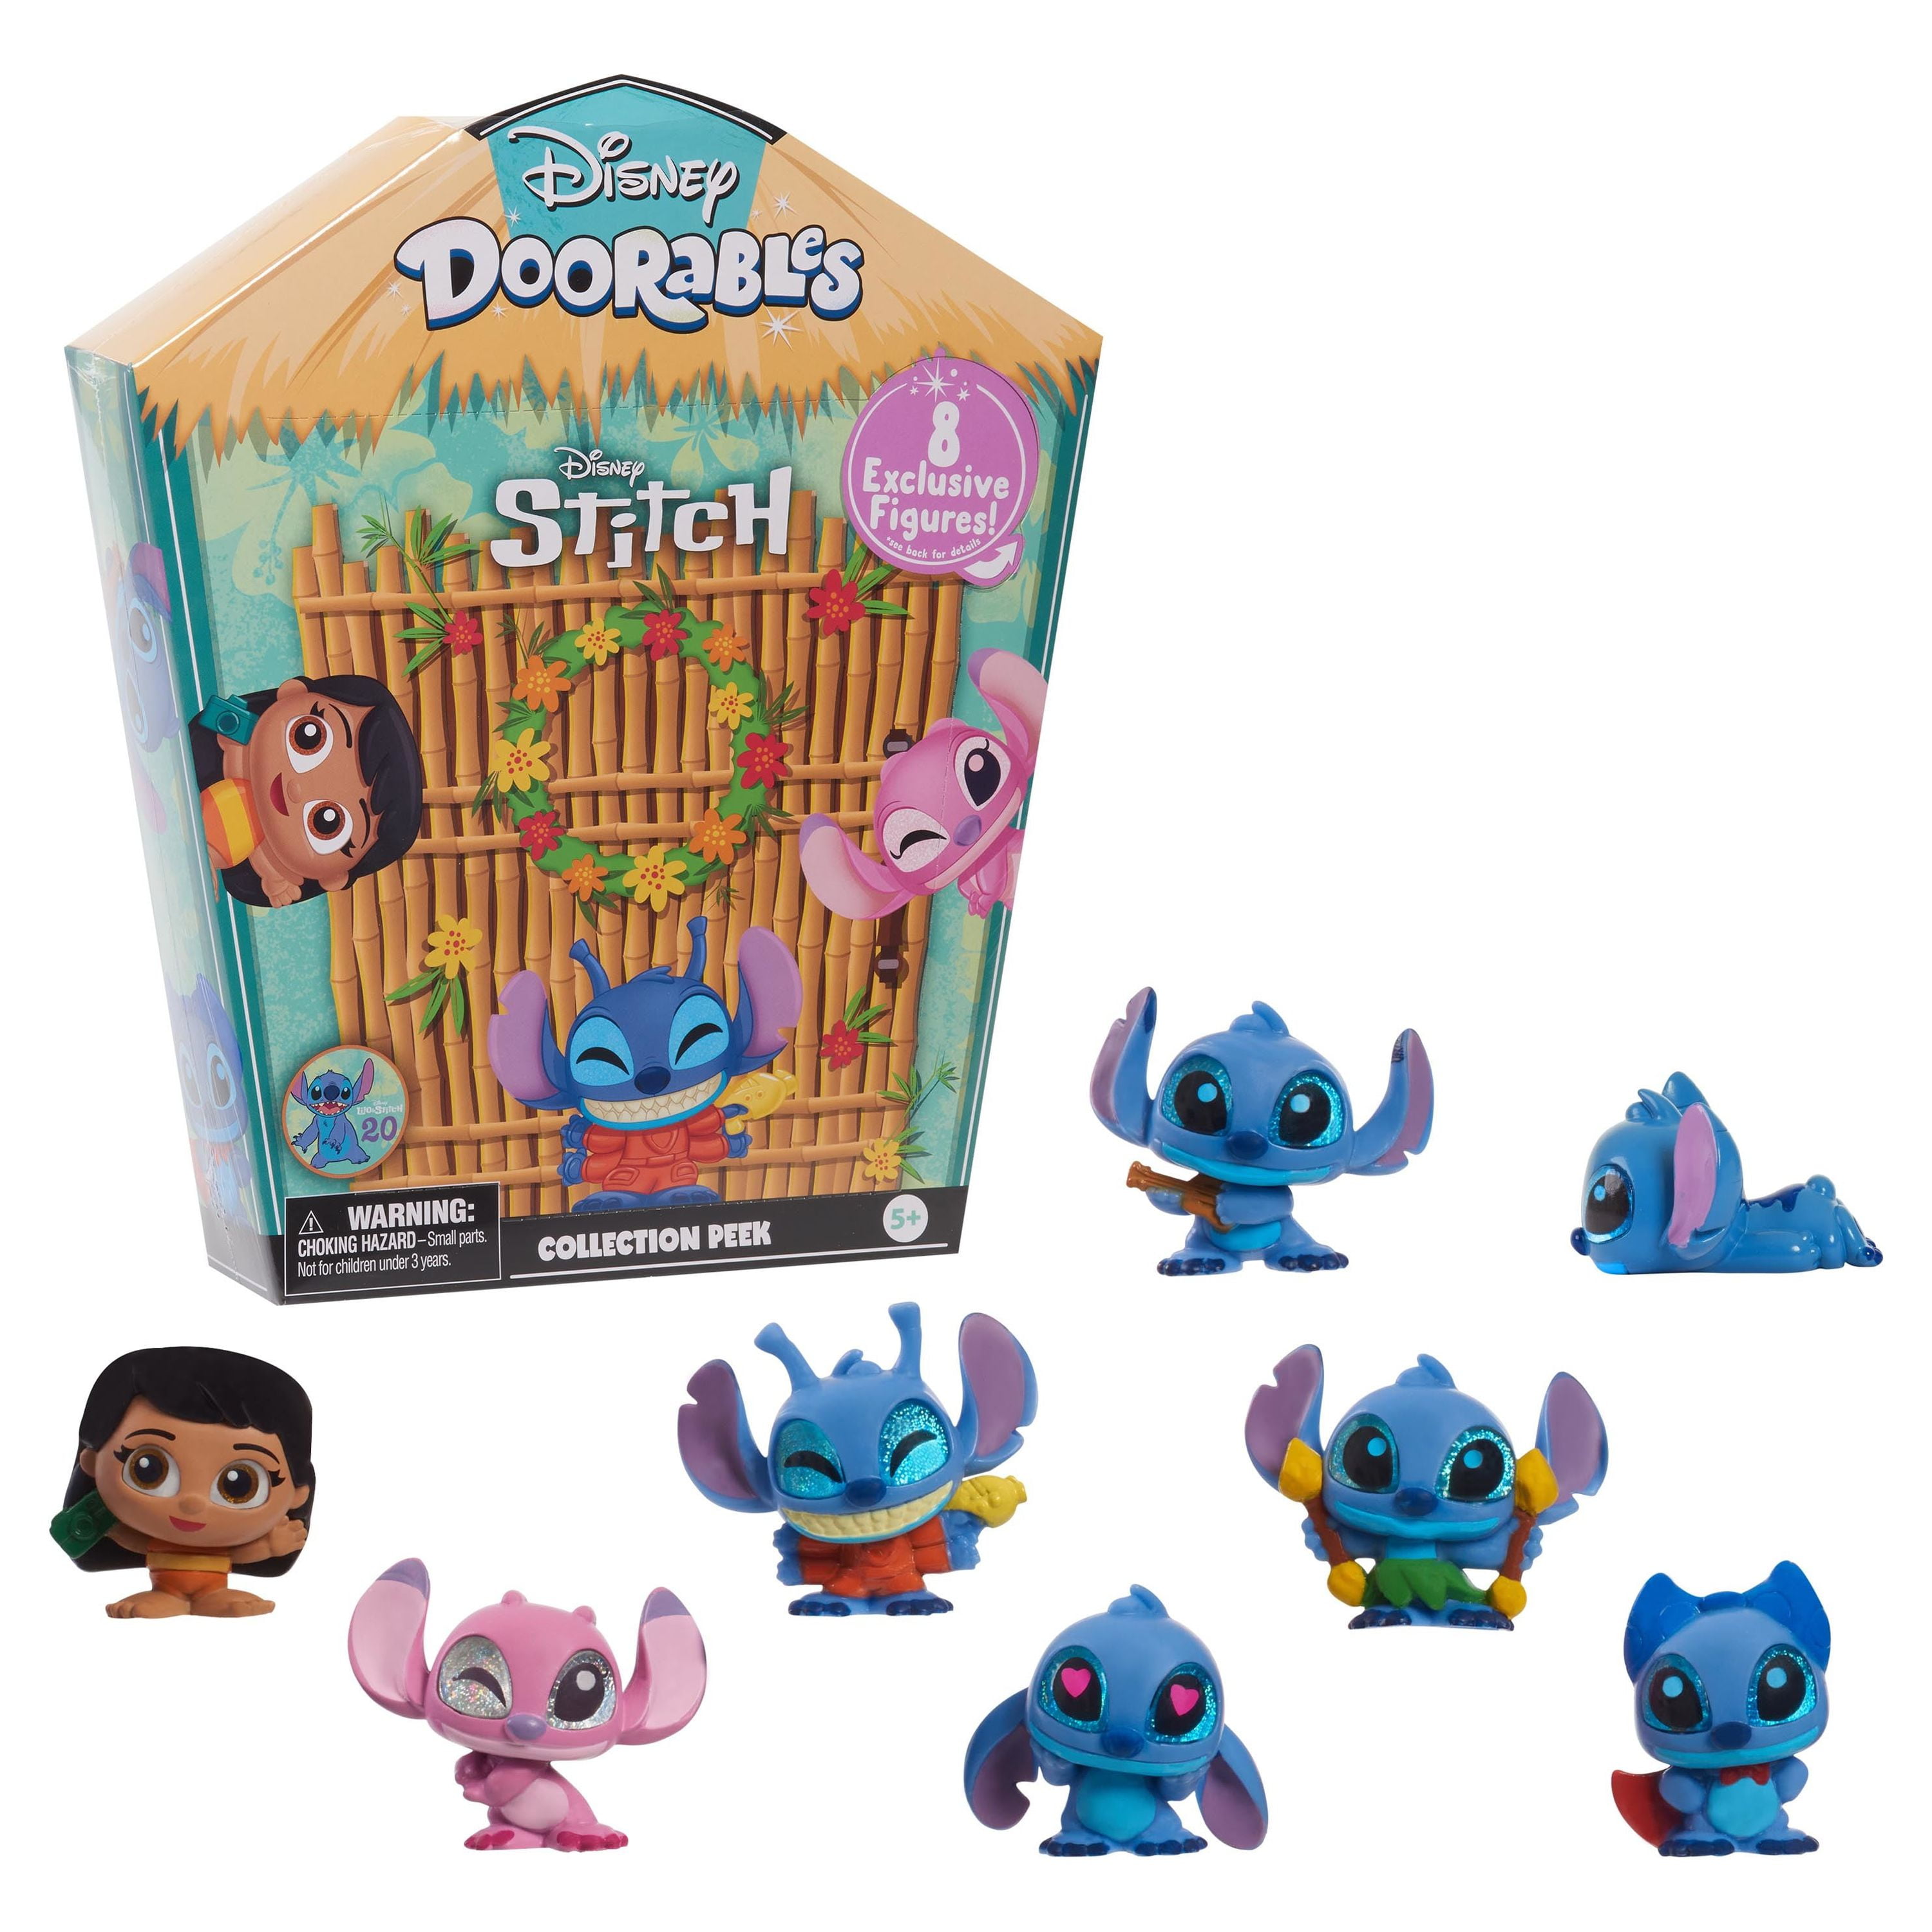 Shop for Disney Lilo & Stitch, Gifts